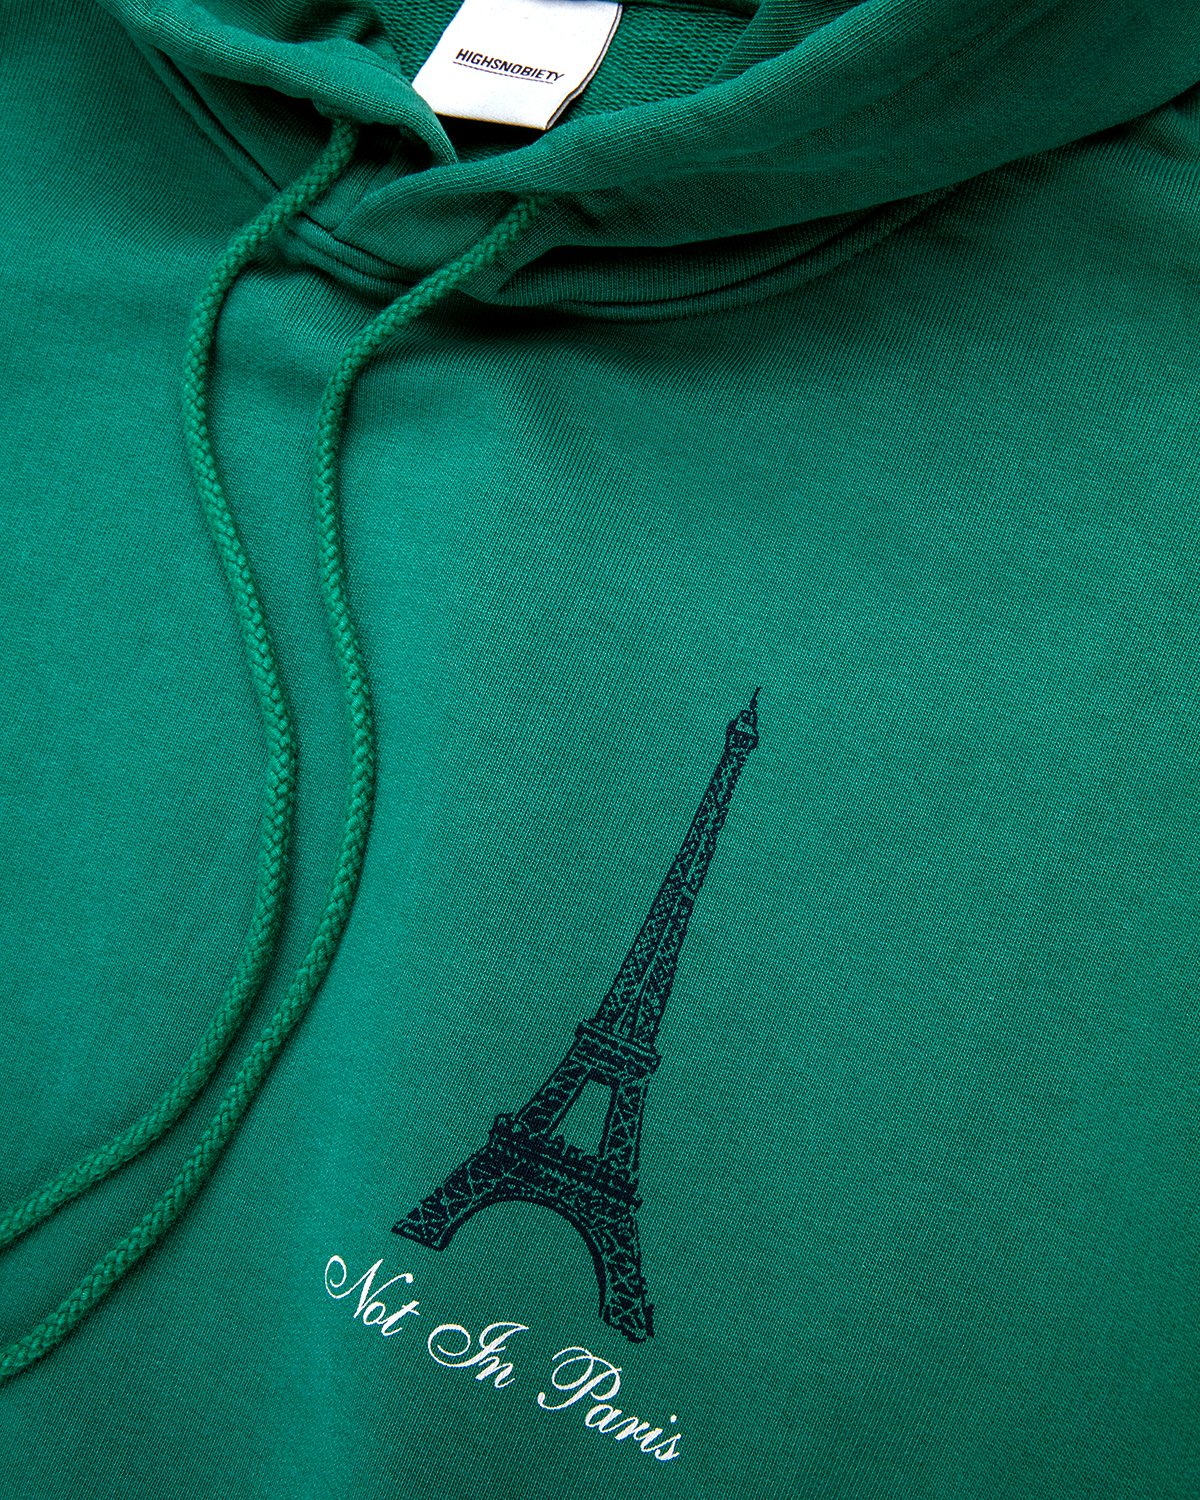 Highsnobiety - Not In Paris 3 Hoodie Green - Clothing - Green - Image 3